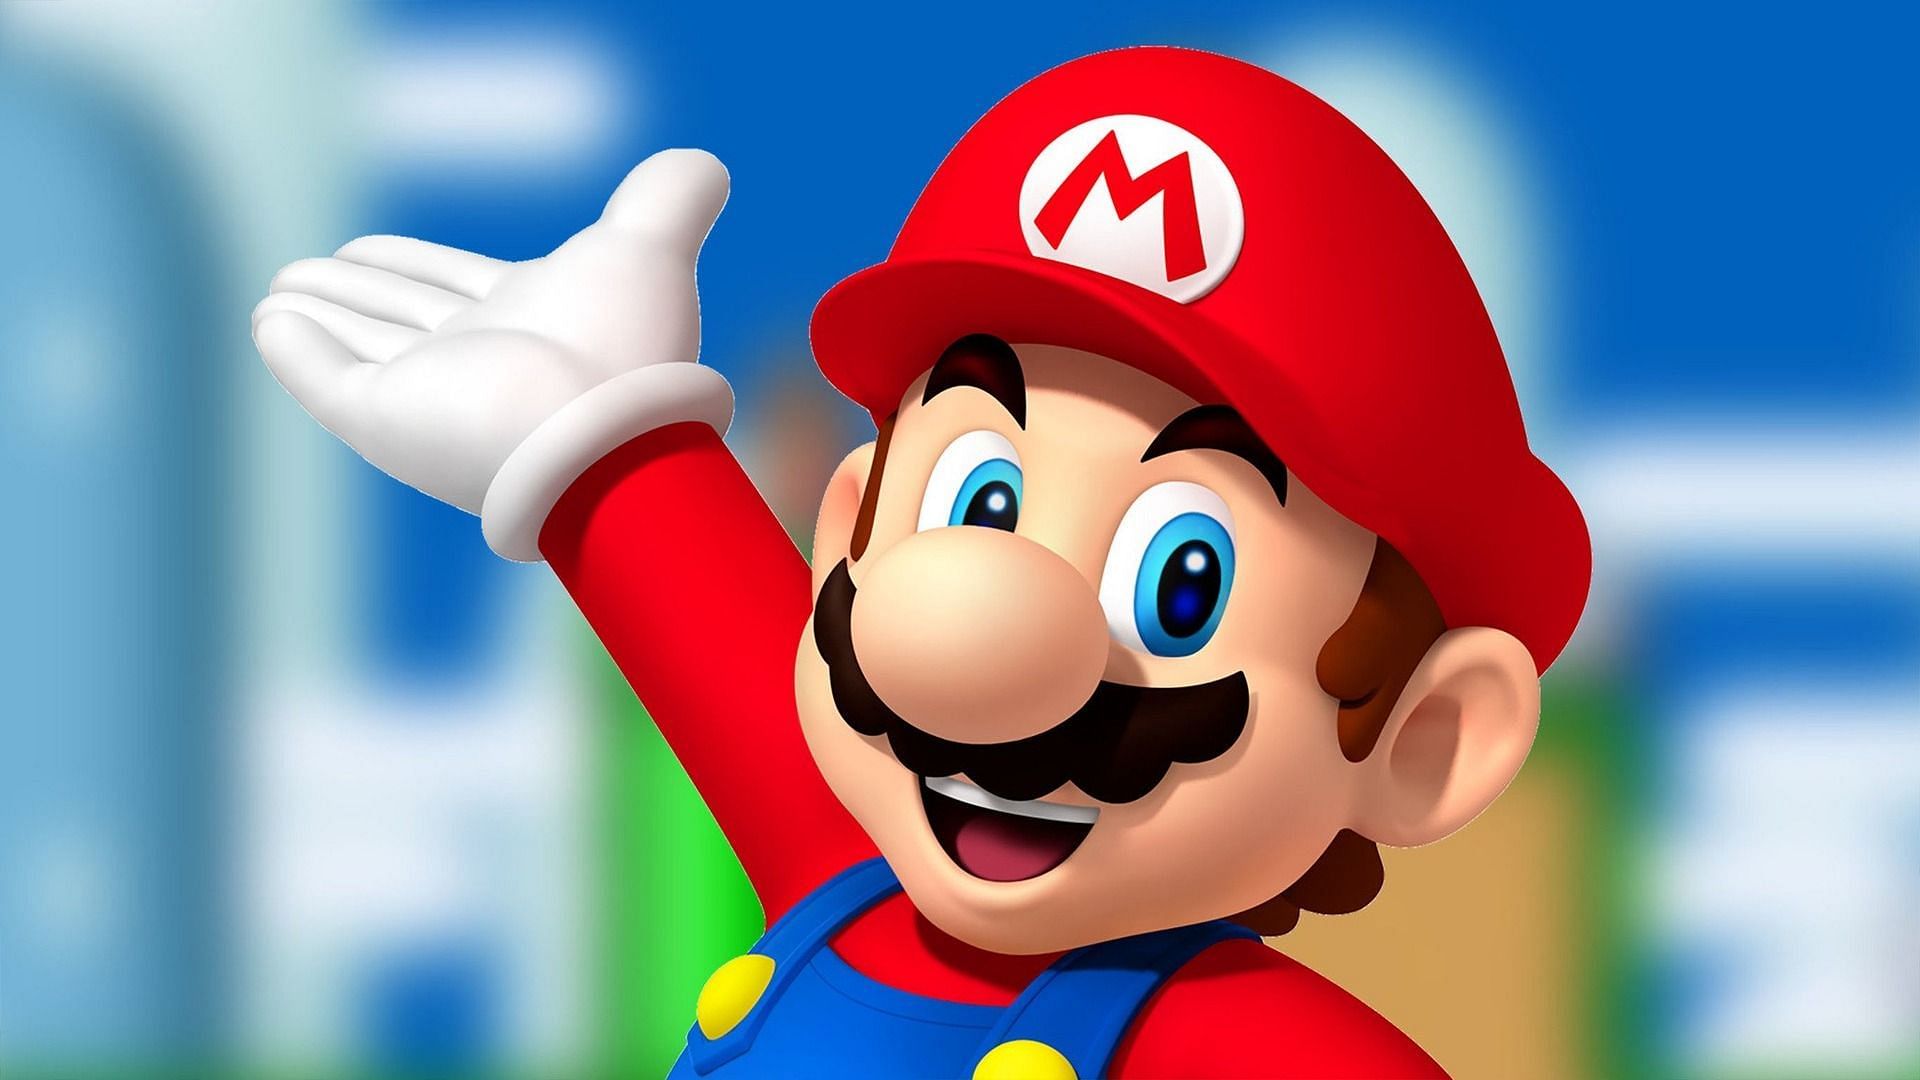 Male video game characters - Mario (Image via Nintendo)